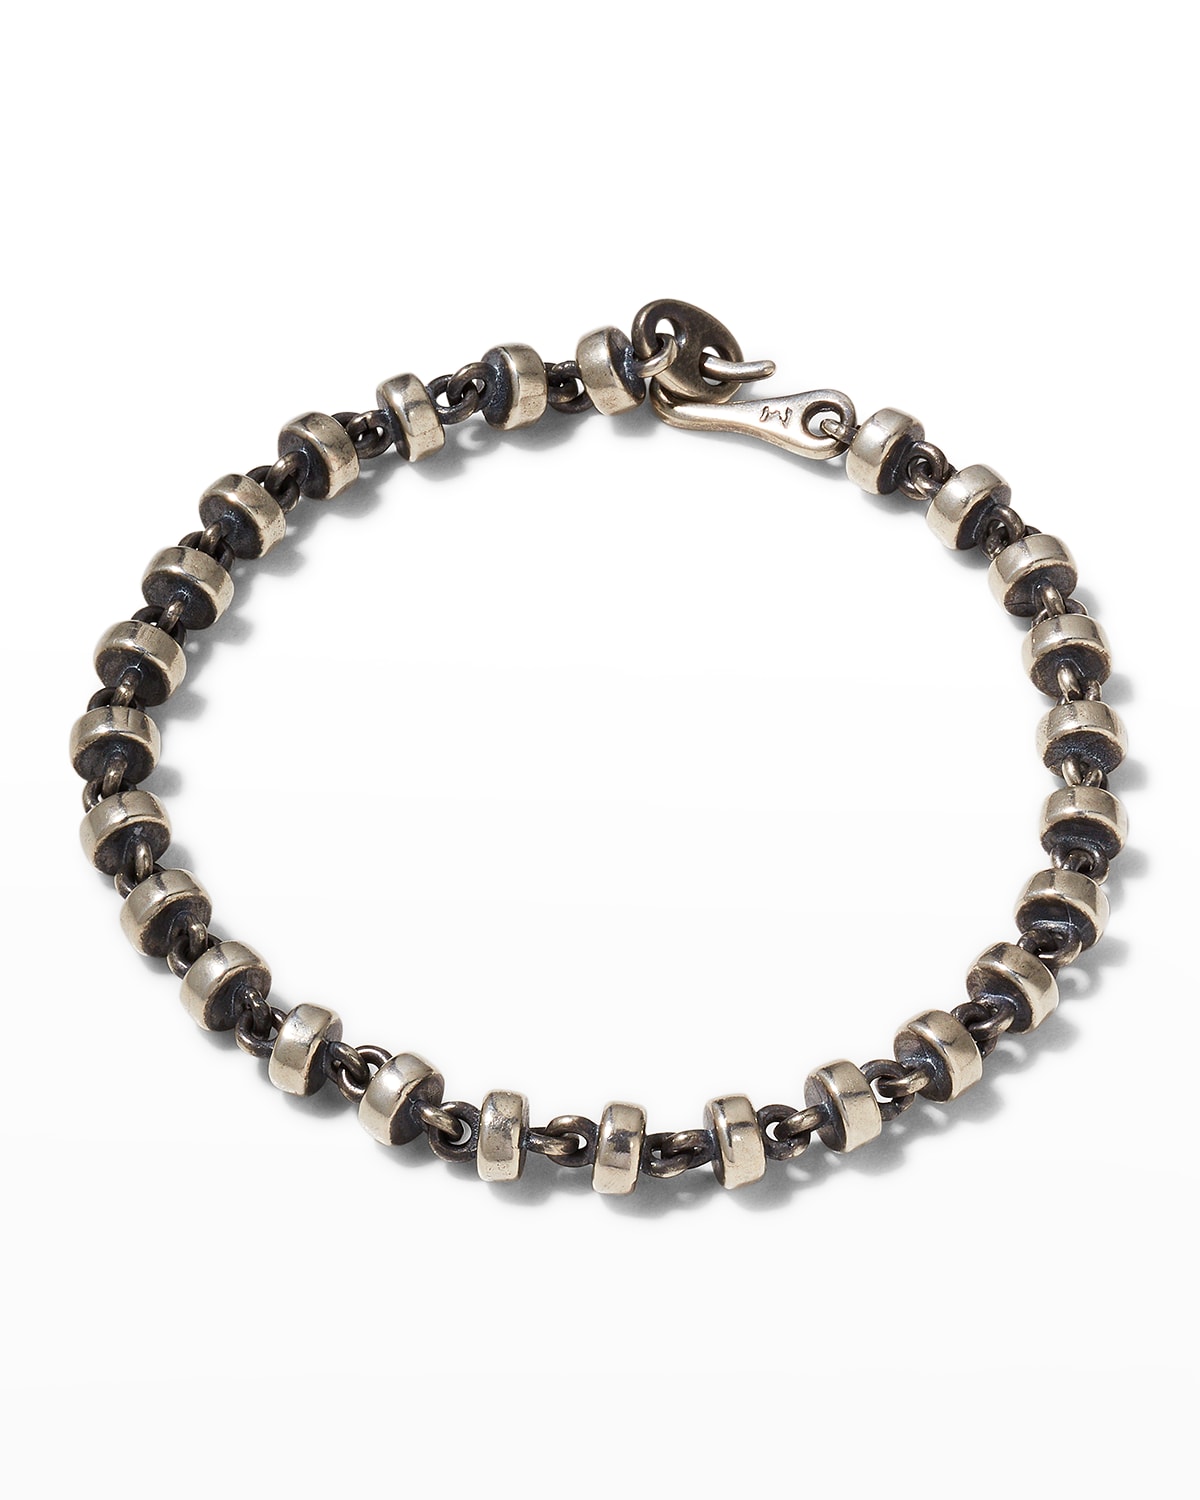 M. Cohen Men's Omni Oxidized Silver Bead Bracelet